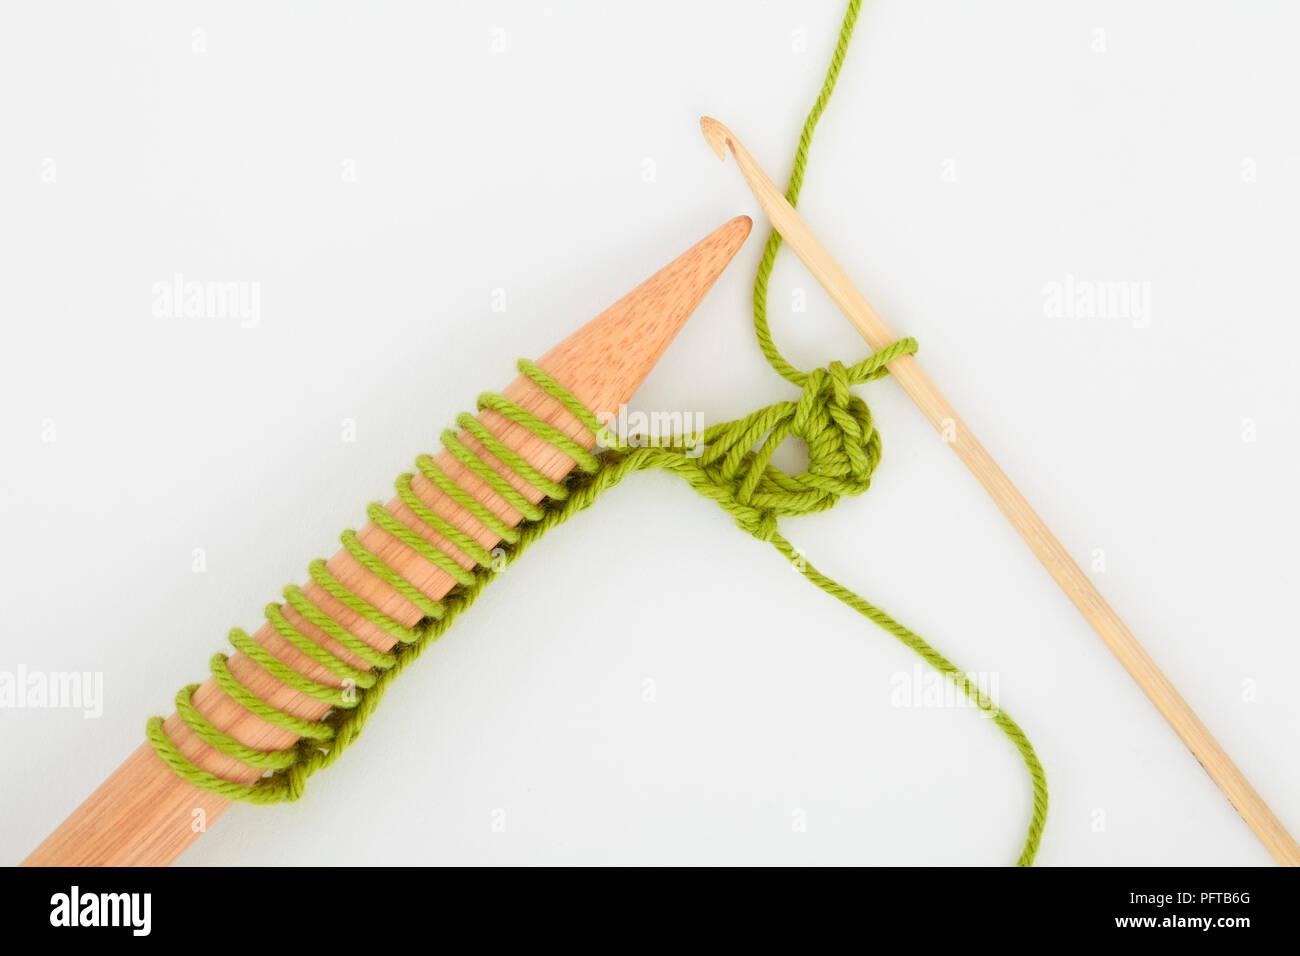 Broomstick lace crochet technique Stock Photo